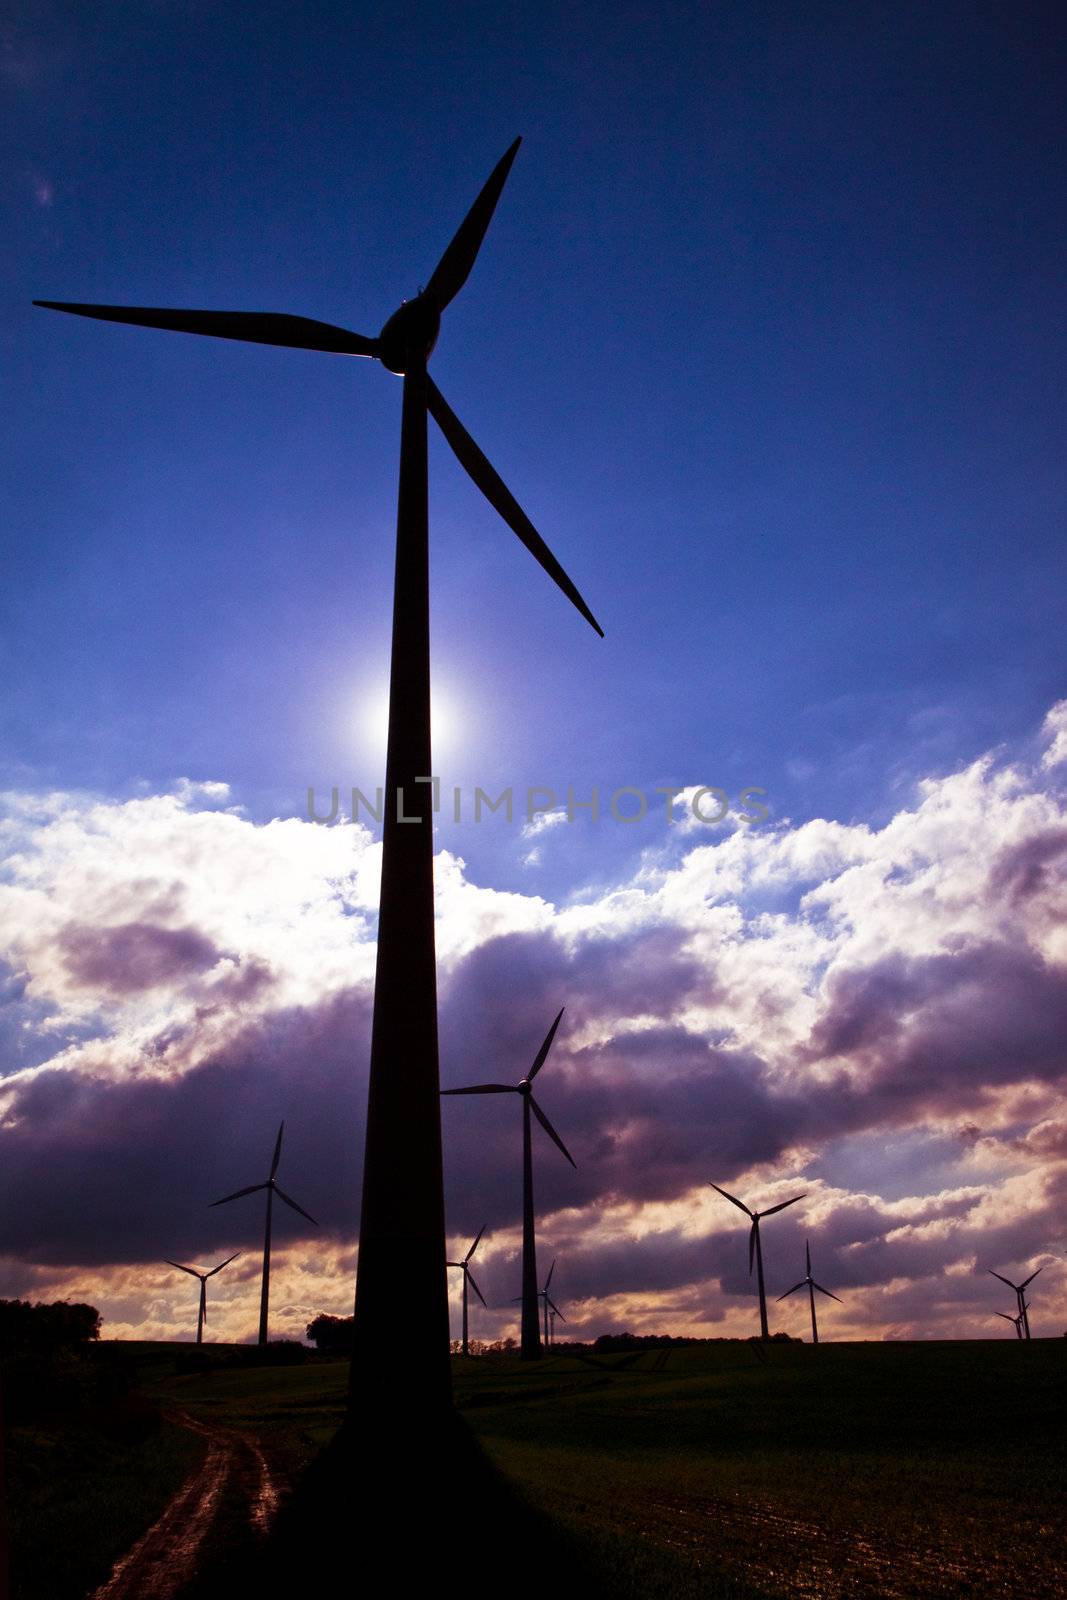 Windmills against a dark, cloudy sky, alternative energy source